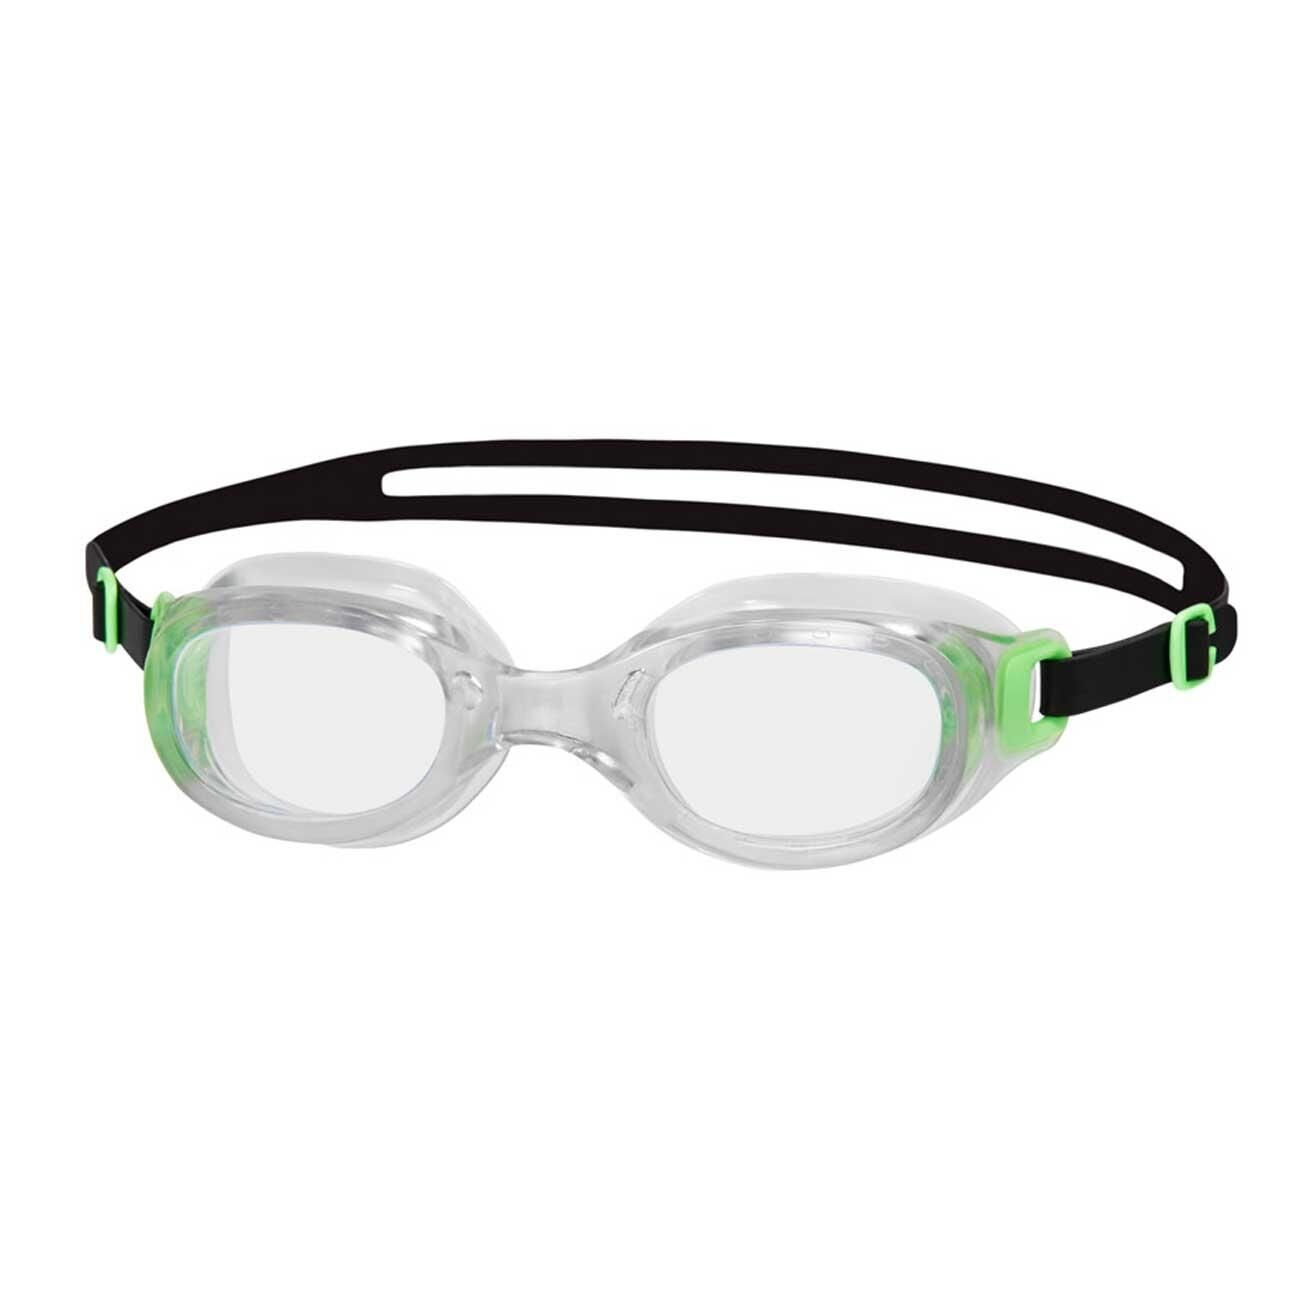 SPEEDO Speedo Futura Classic Goggles, Green/Clear